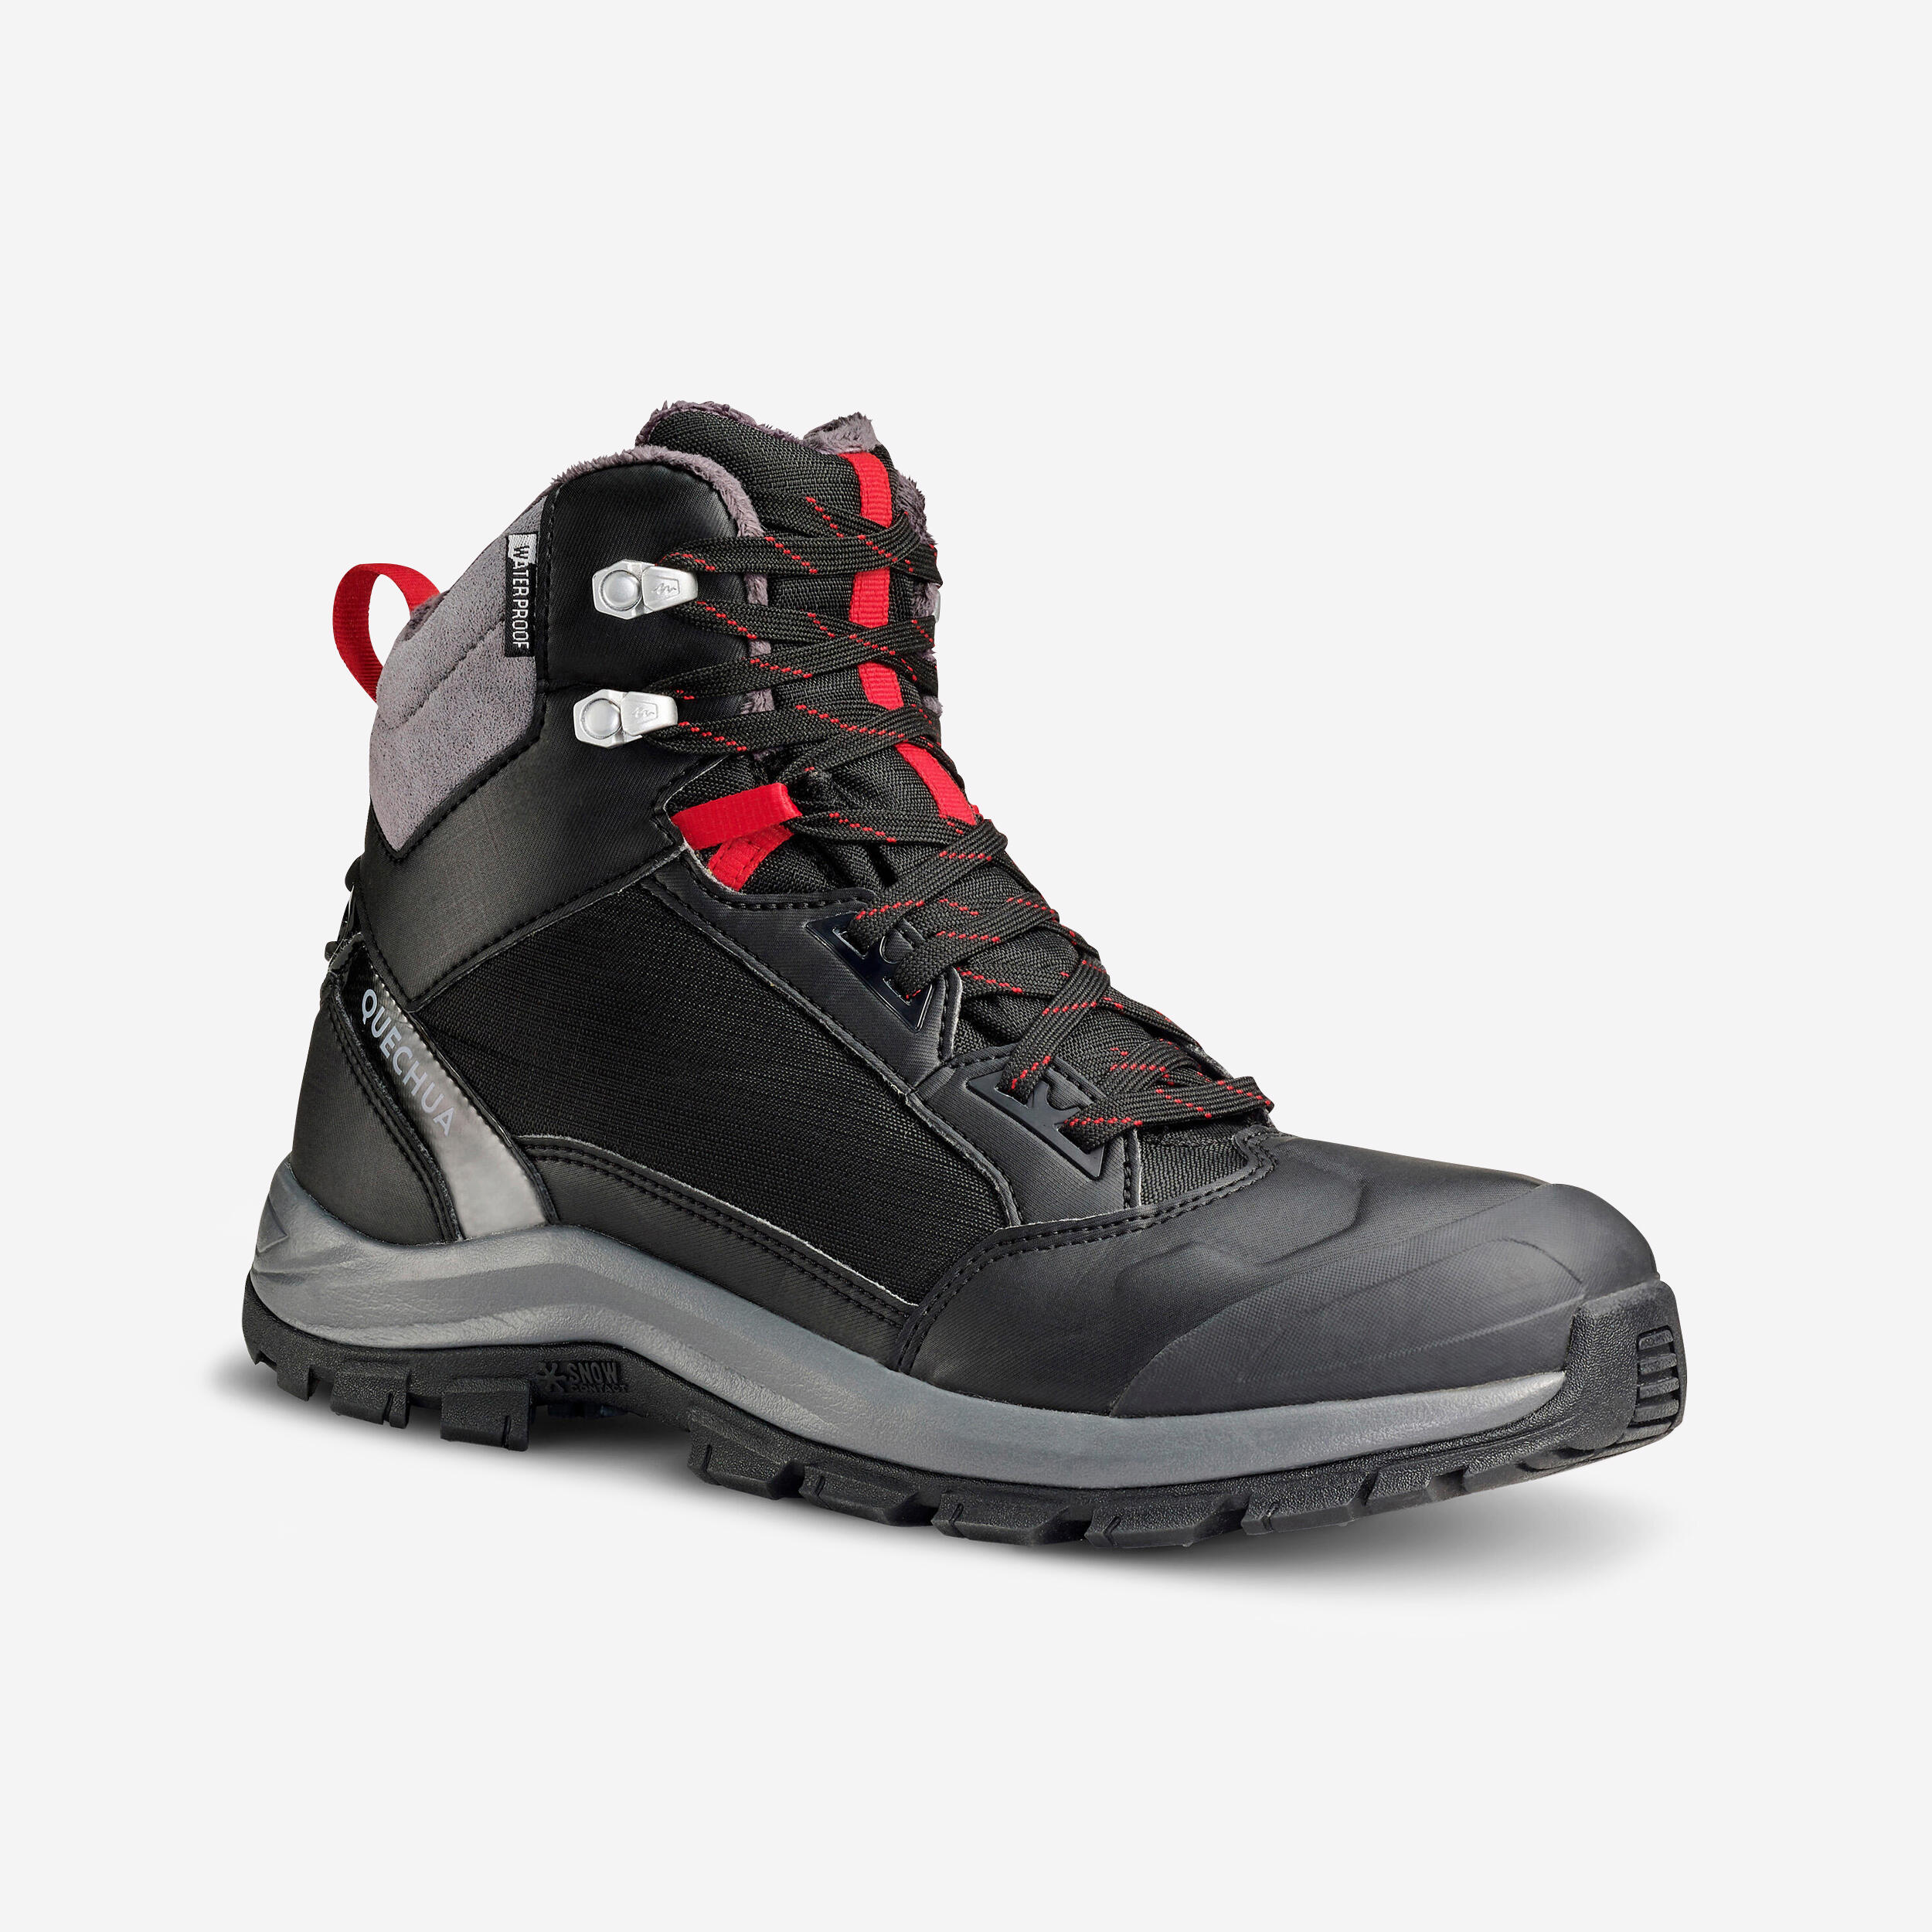 Men's Winter Boots - SH 500 - black, [EN] flame red - Quechua - Decathlon